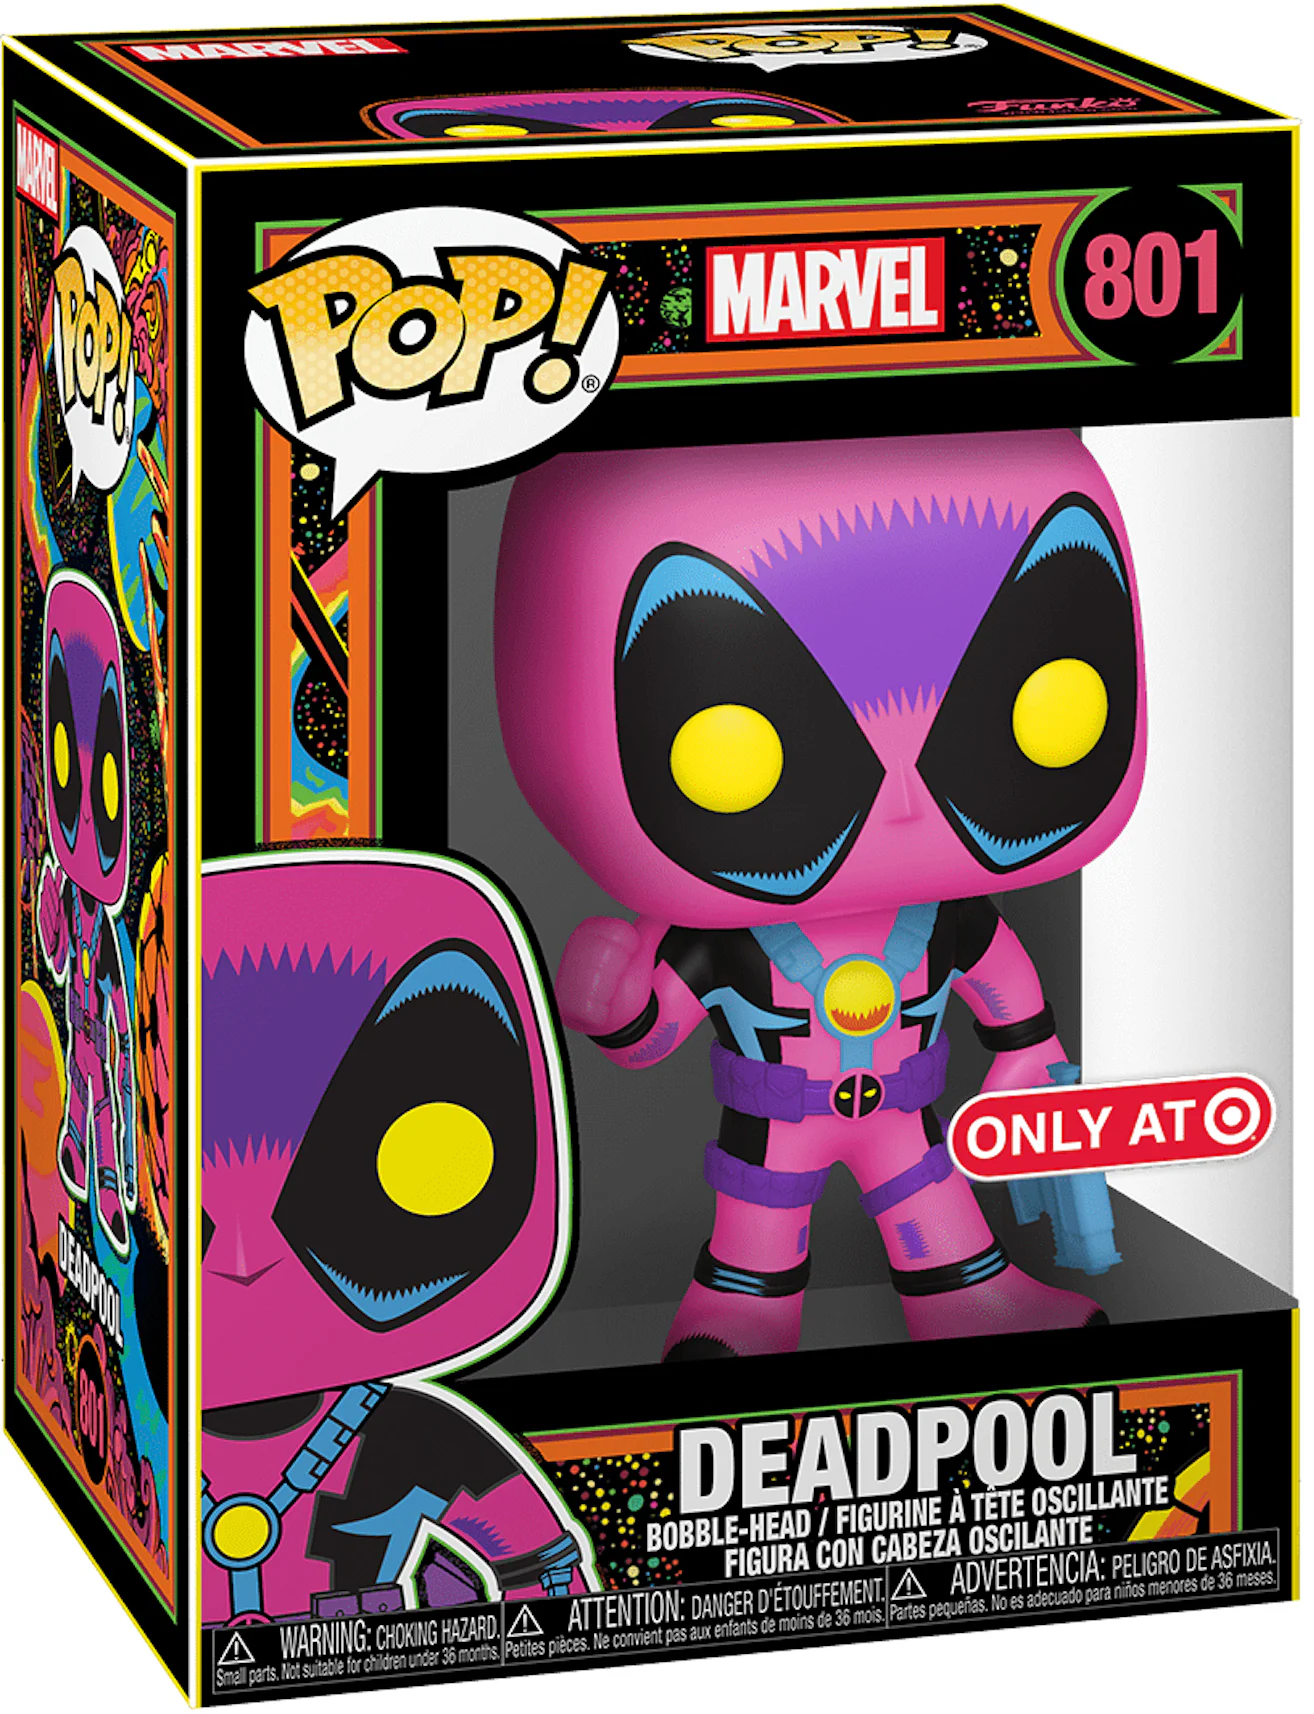 Funko Pop! Deadpool Pandapool (Flocked) (Chase) Bobble-Head Figure #328 - US